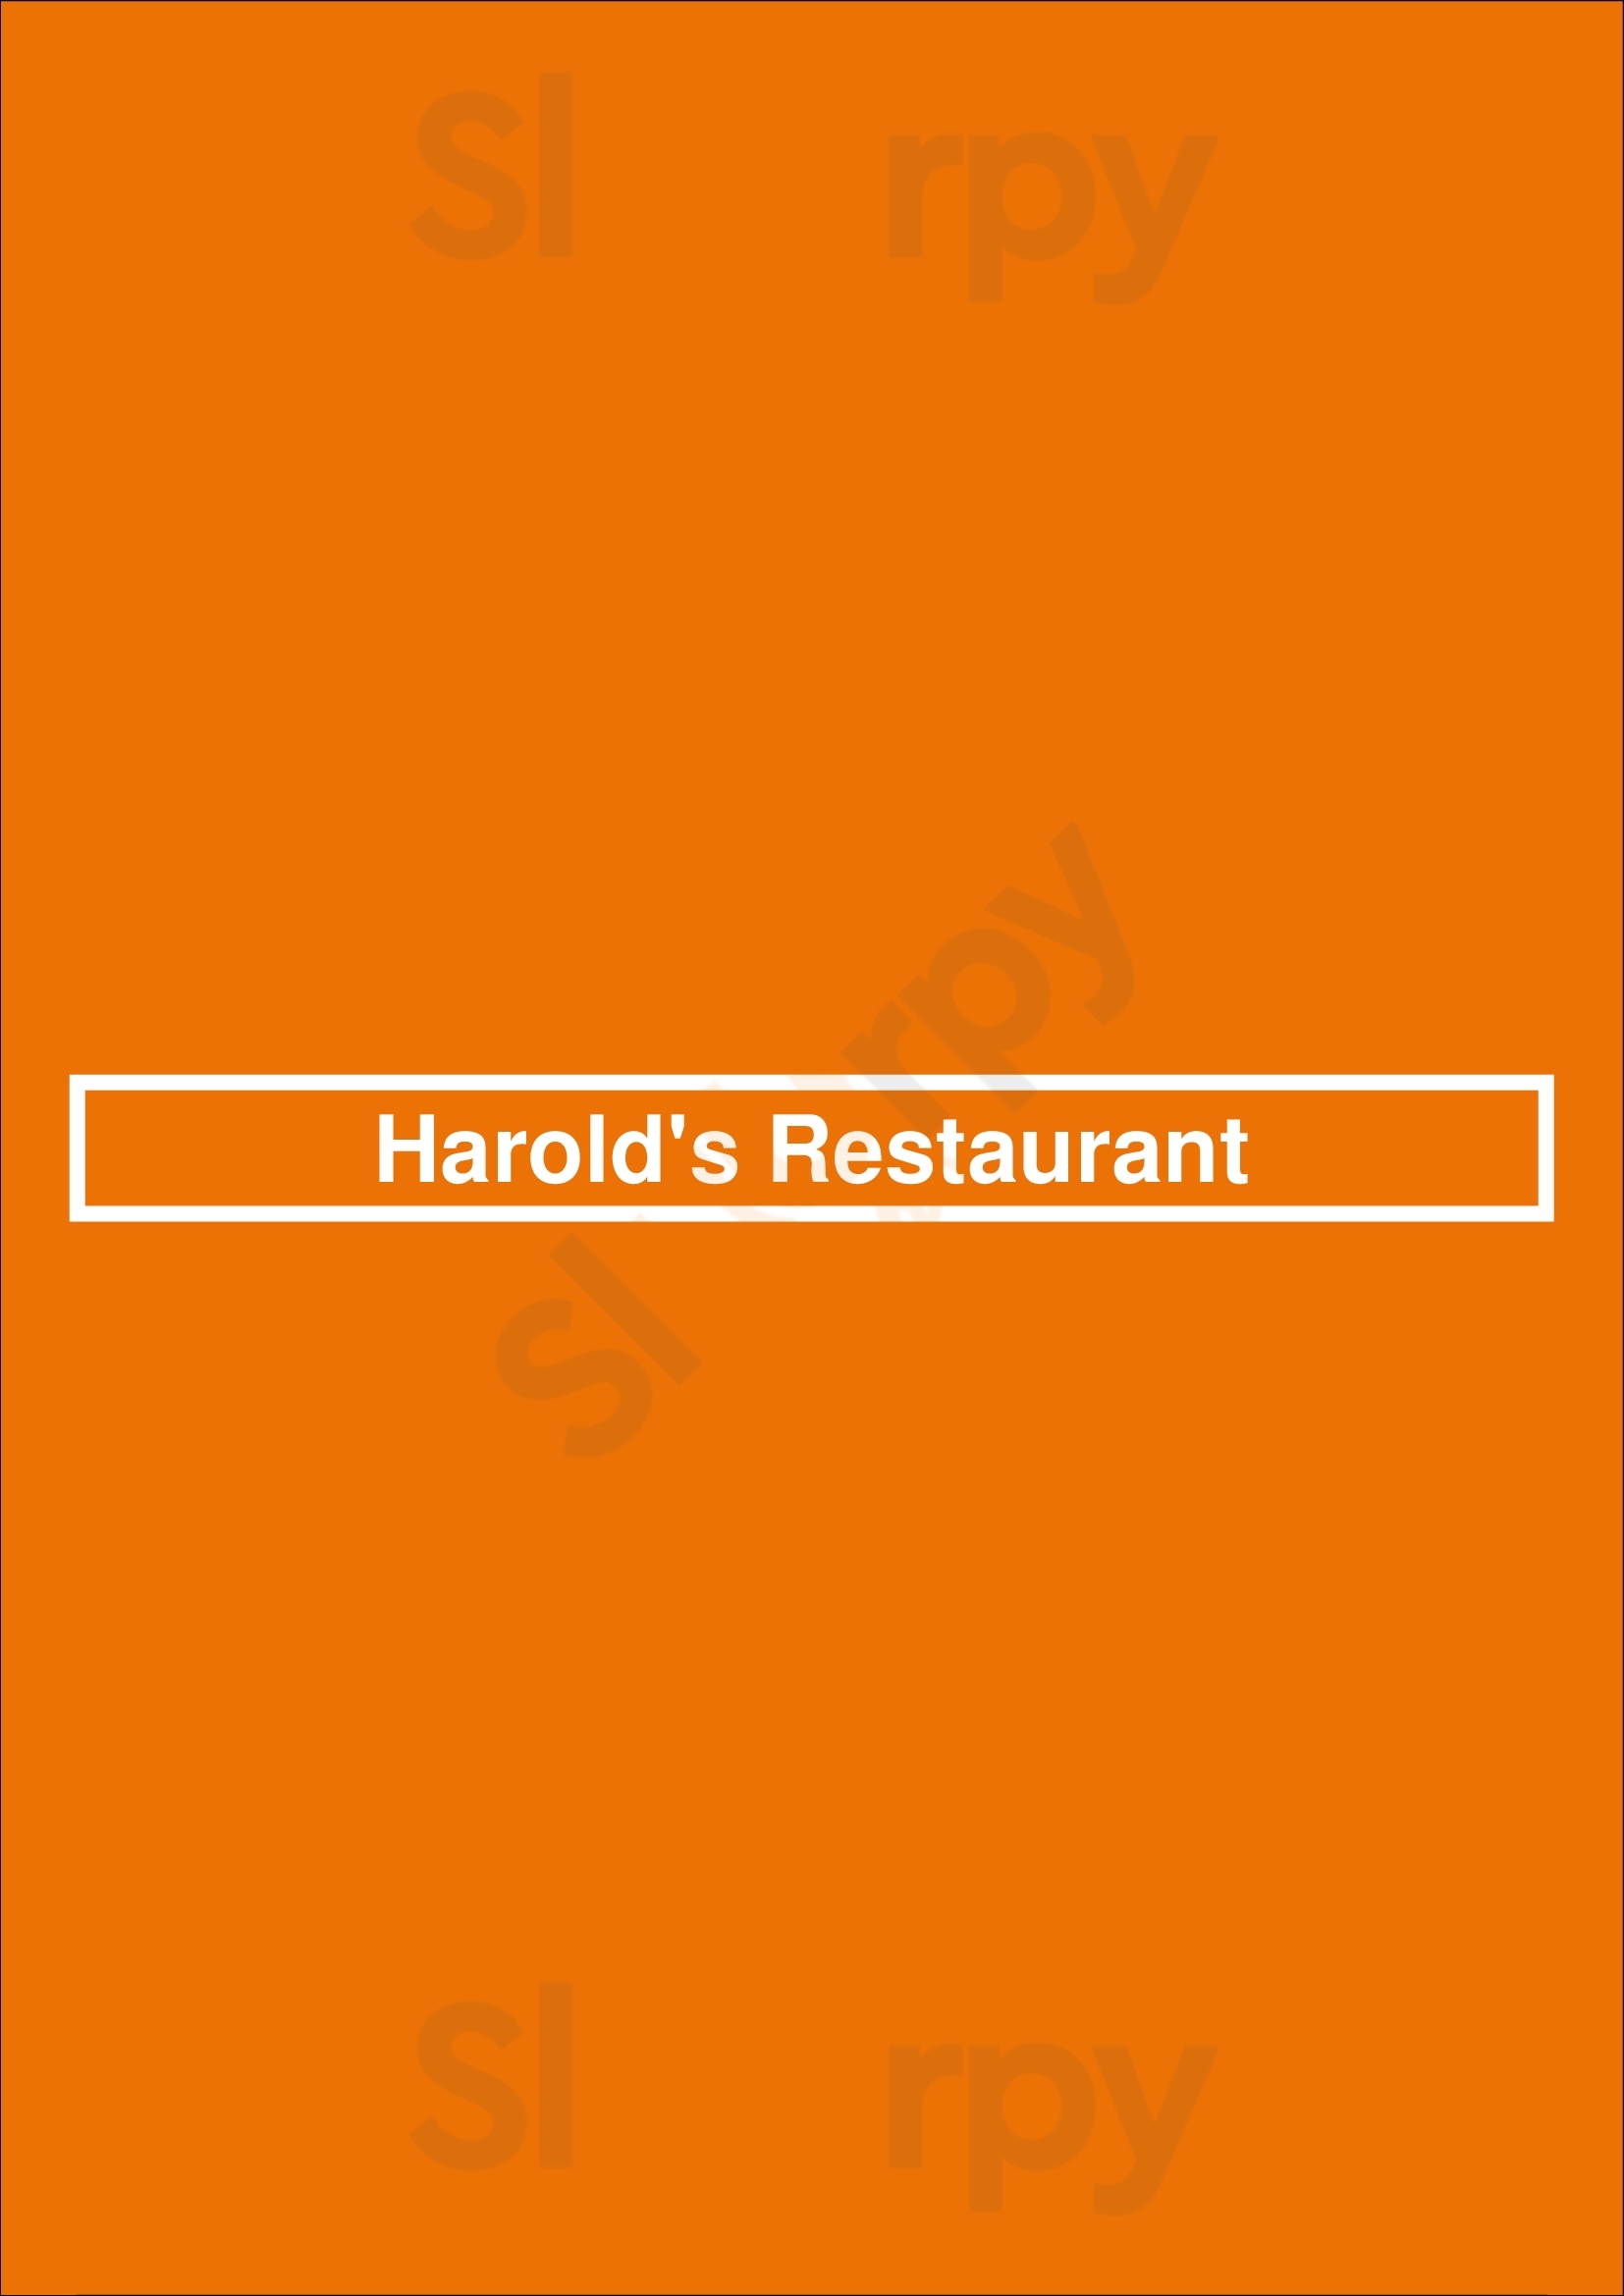 Harold's Restaurant, Bar, & Terrace Houston Menu - 1